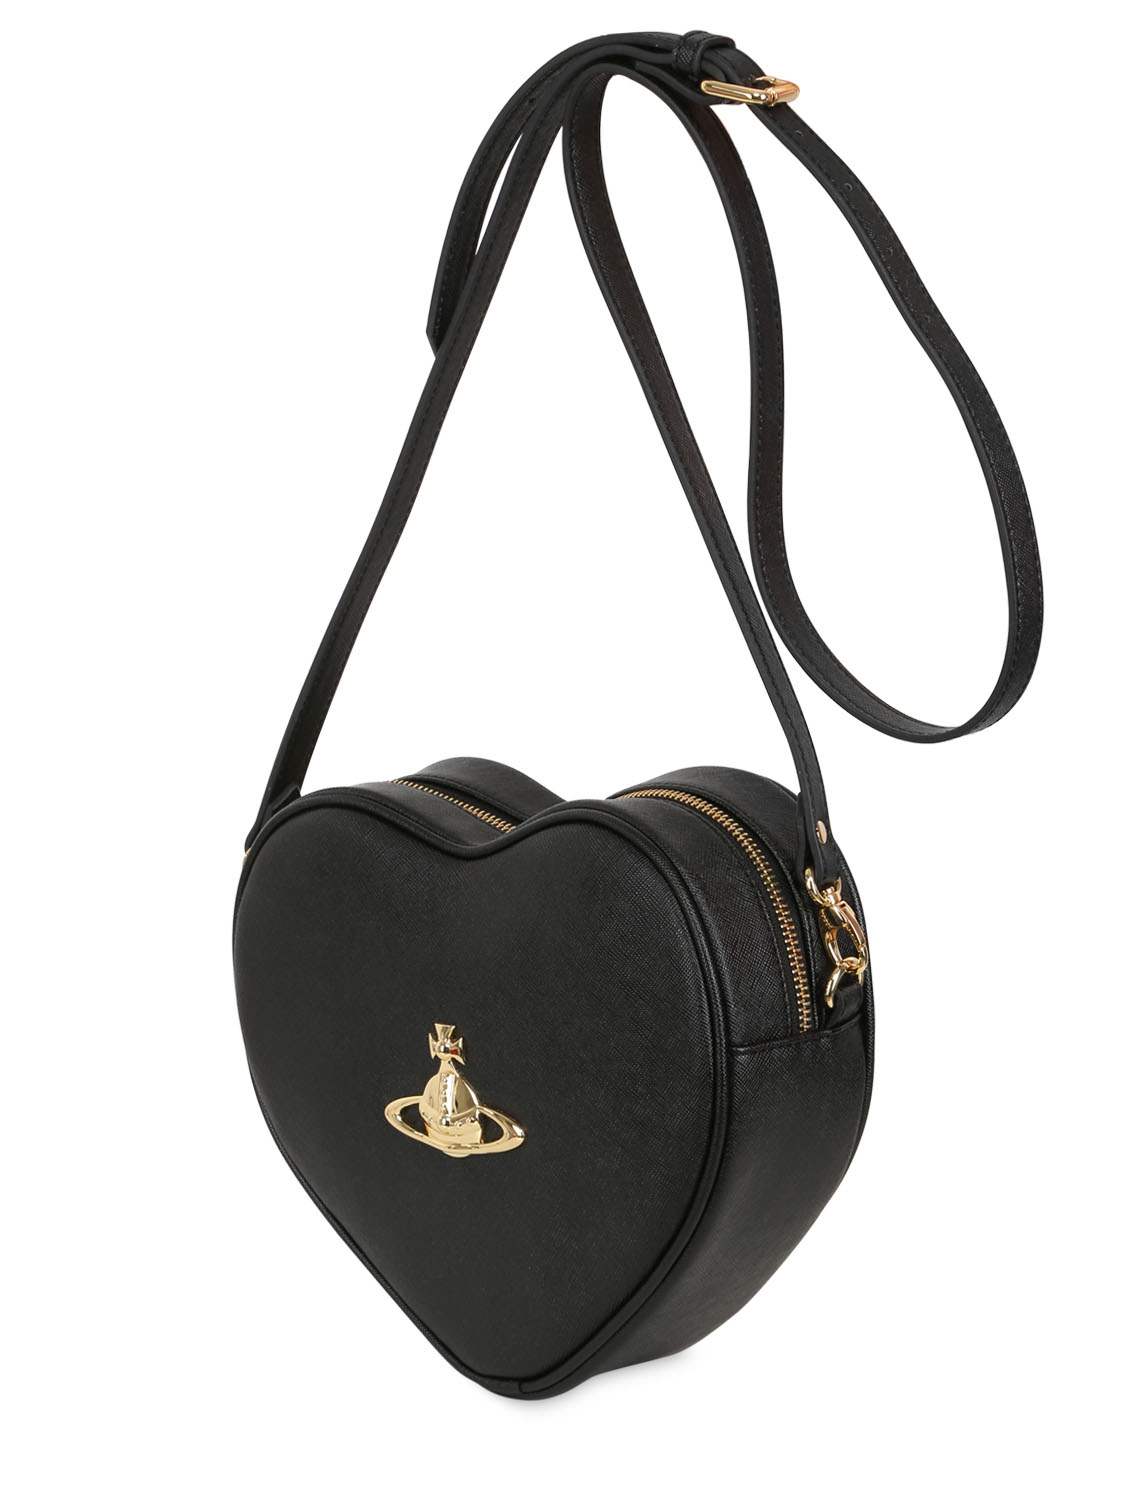 Vivienne Westwood Handbag Heart | semashow.com